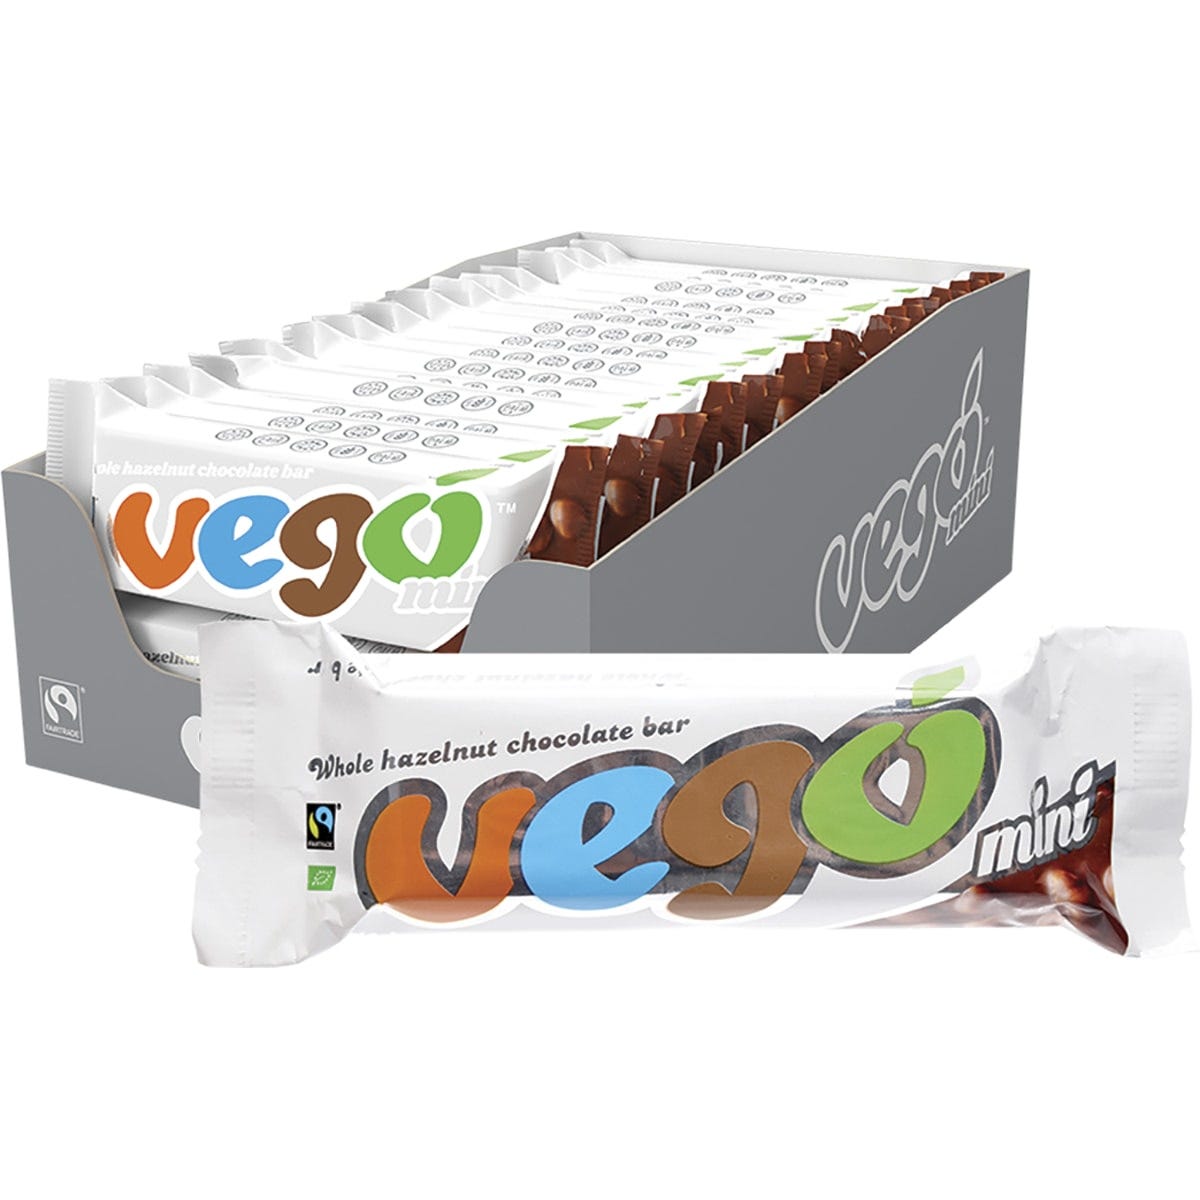 Vego Whole Hazelnut Chocolate Bar Mini 65g - Dr Earth - Chocolate & Carob